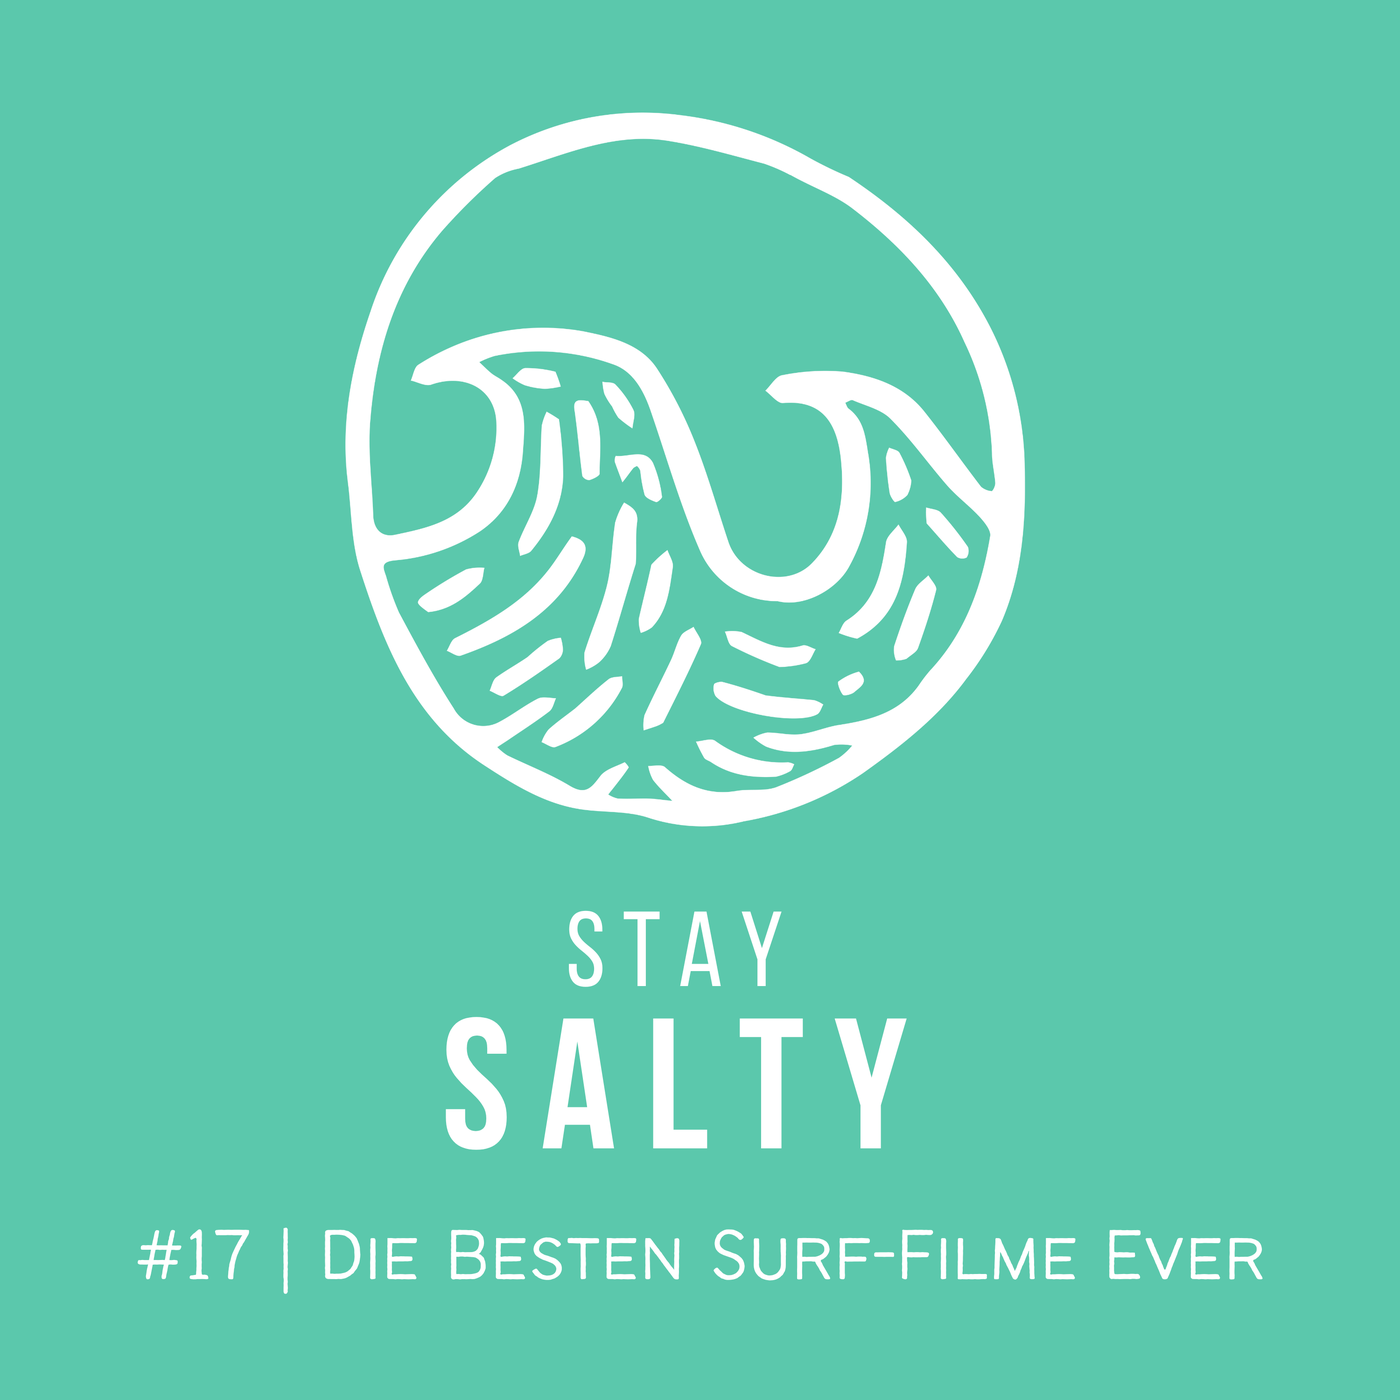 #17 STAY SALTY | Die besten Surf-Filme ever!